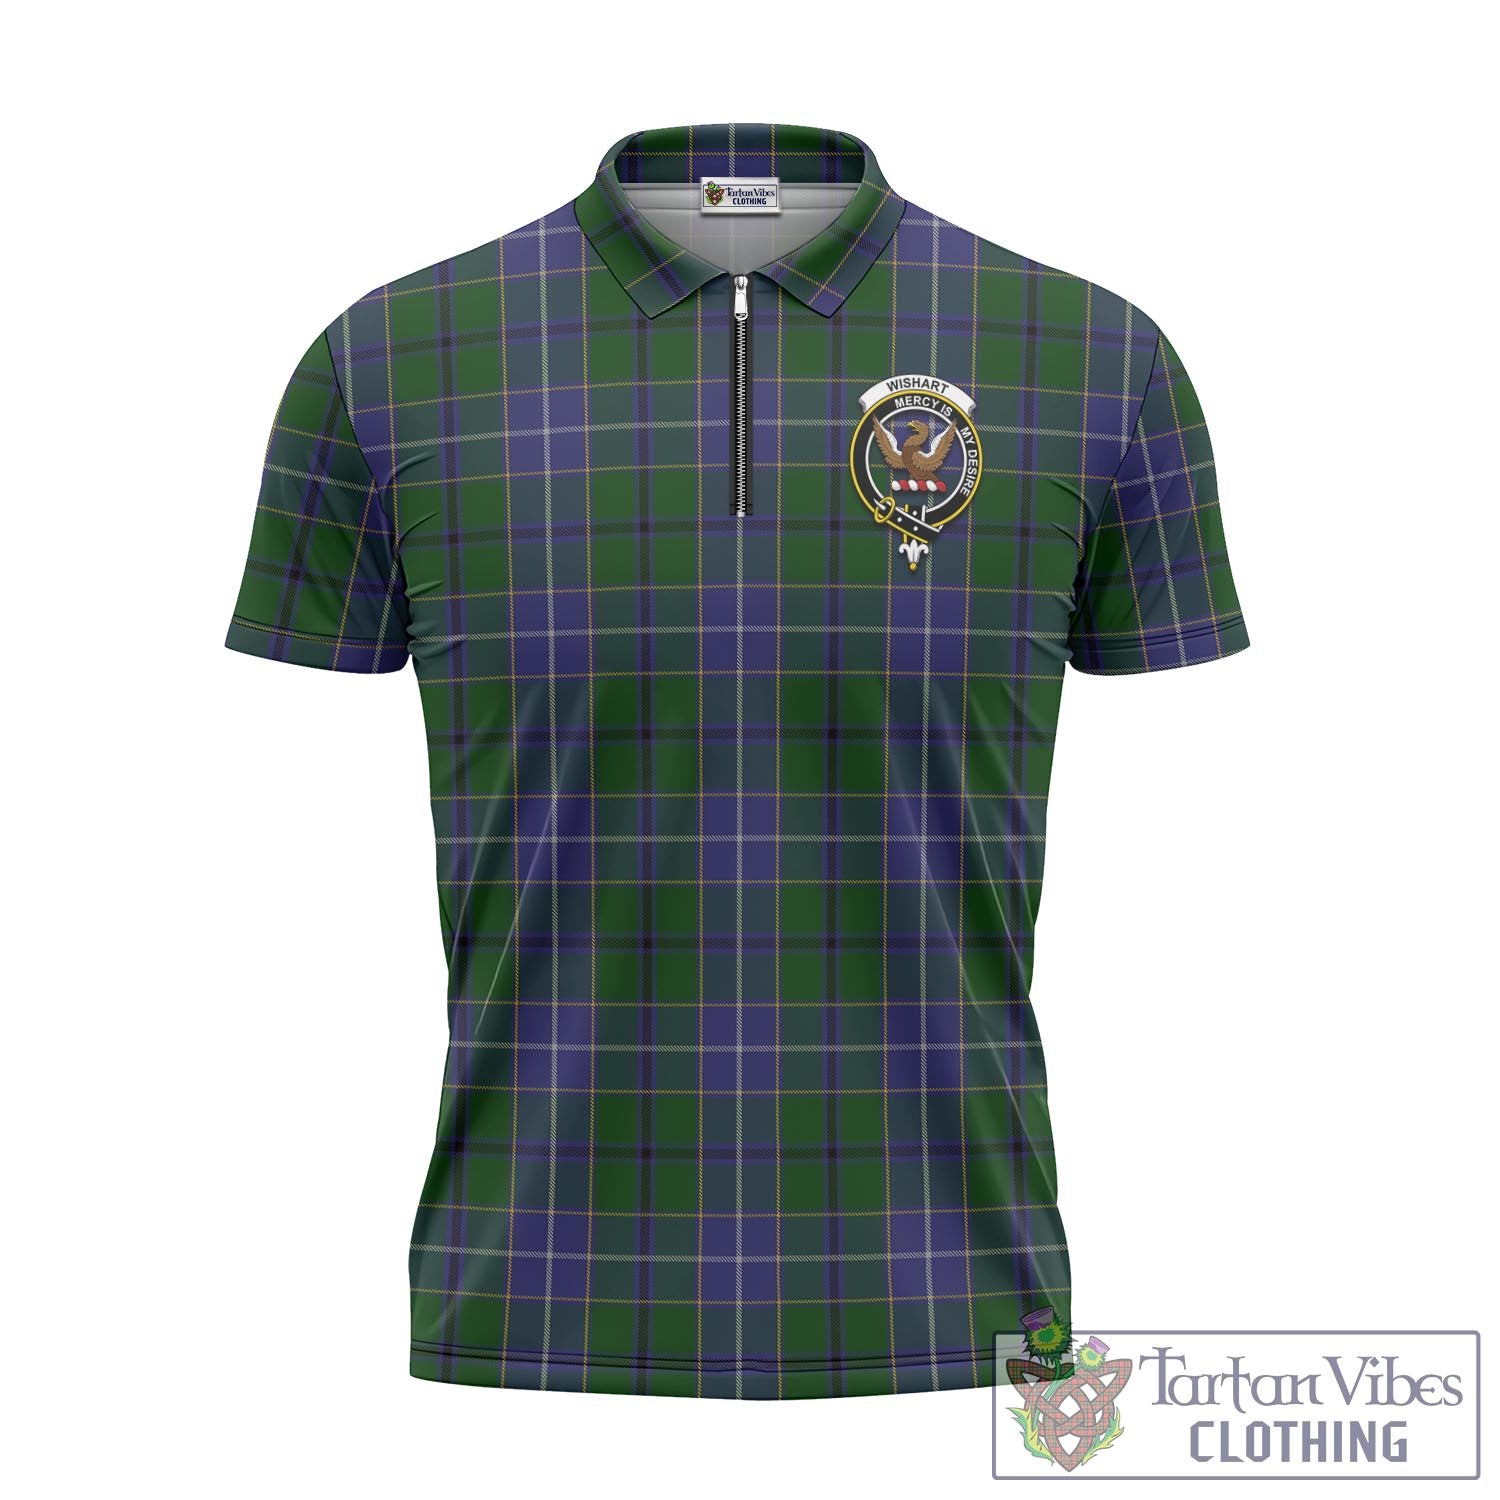 Tartan Vibes Clothing Wishart Hunting Tartan Zipper Polo Shirt with Family Crest